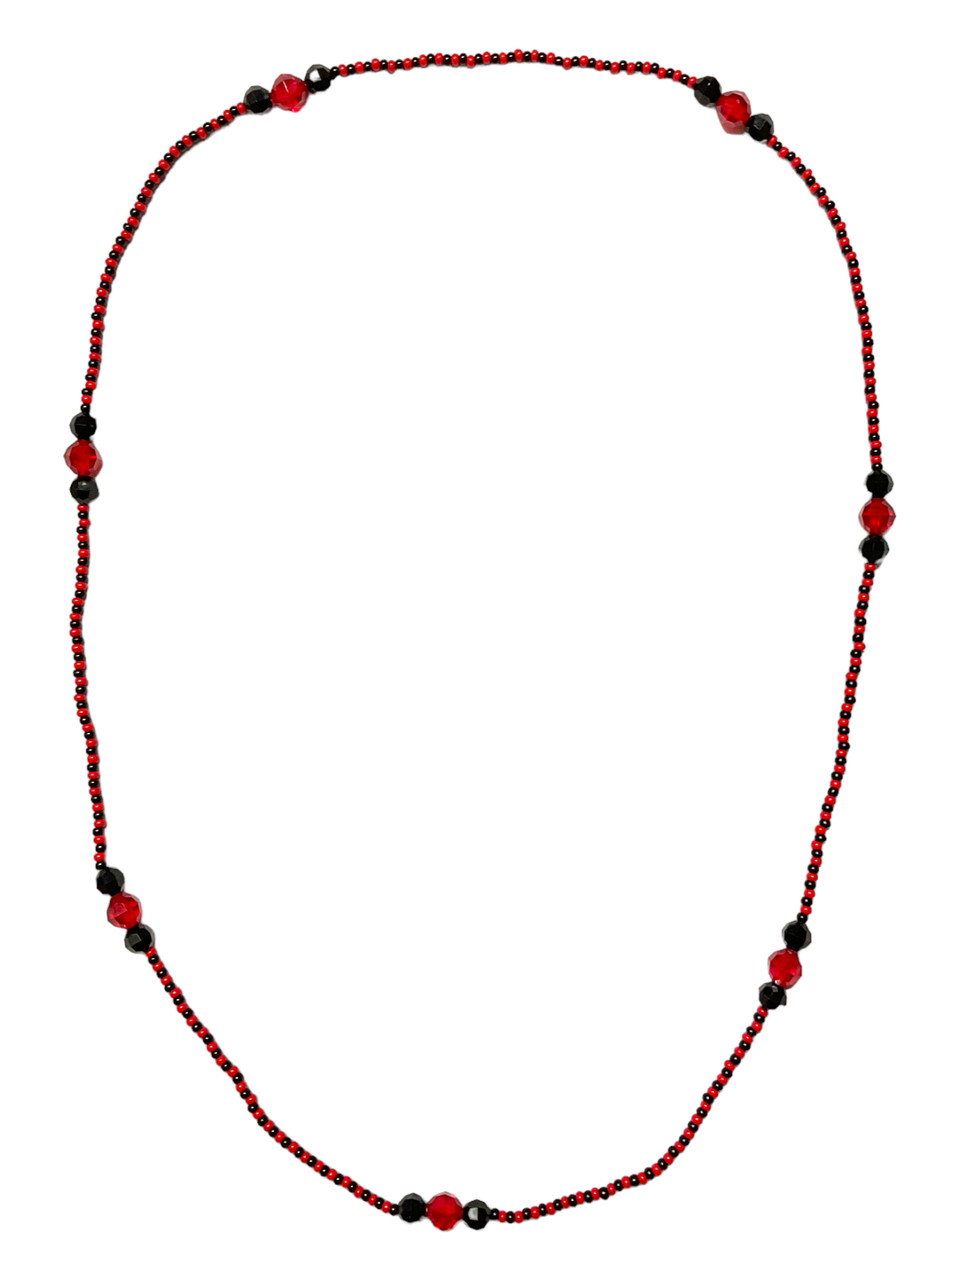 Orisha Eleggua Guardian Of The Crossroads Black/White Eleke Bead 34  Spiritual Necklace For Protection, Guidance, Road Opening, ETC. - Lazaro  Brand Spiritual Store